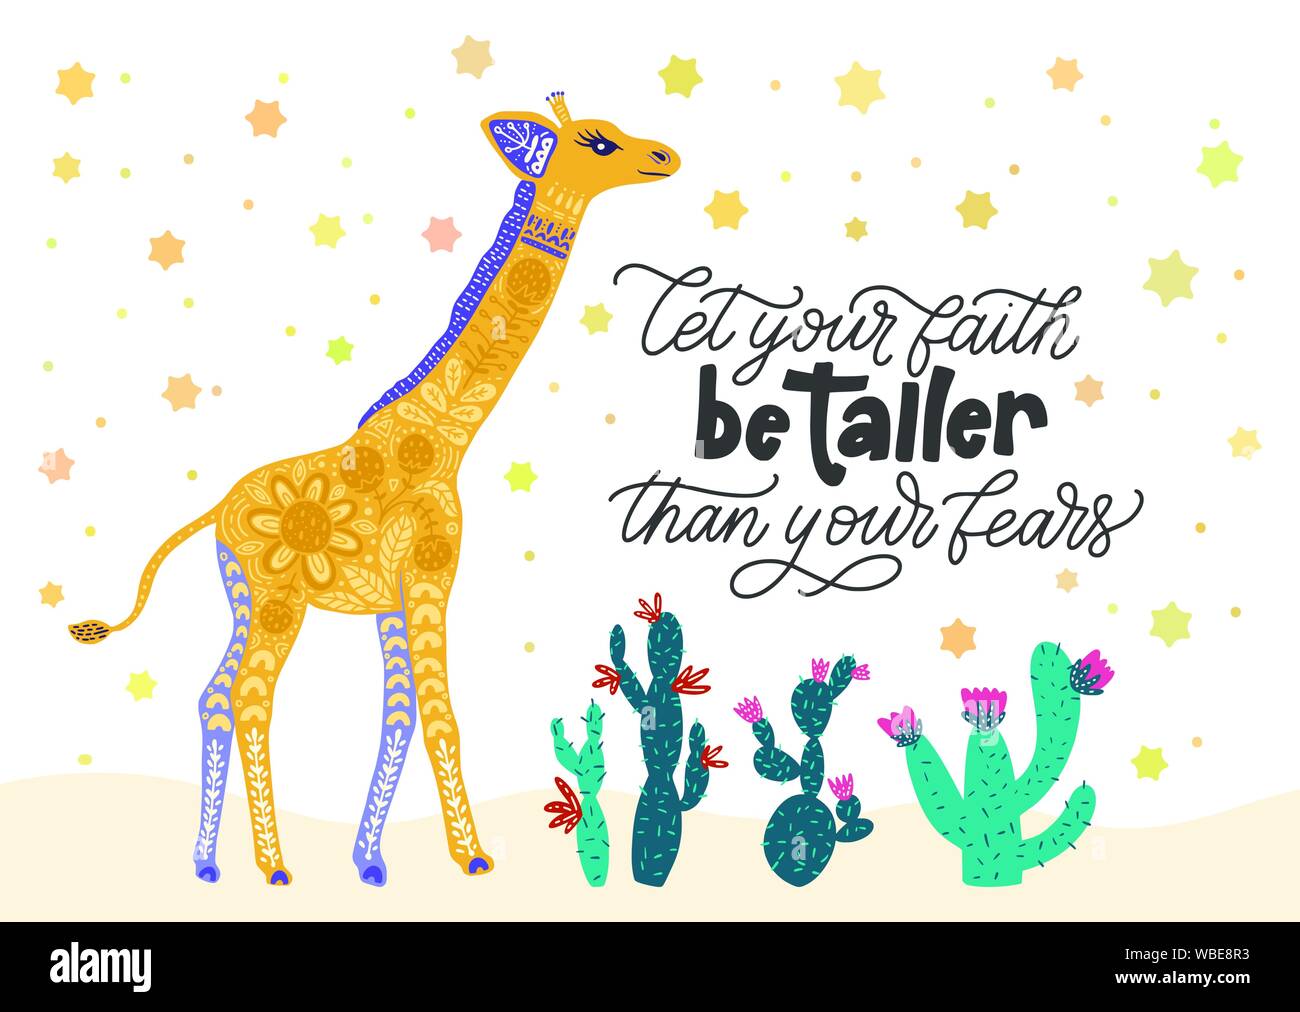 Cartoon giraffe vector flat illustration in scandinavian style. Let your faith be taller than your fears. Stock Vector